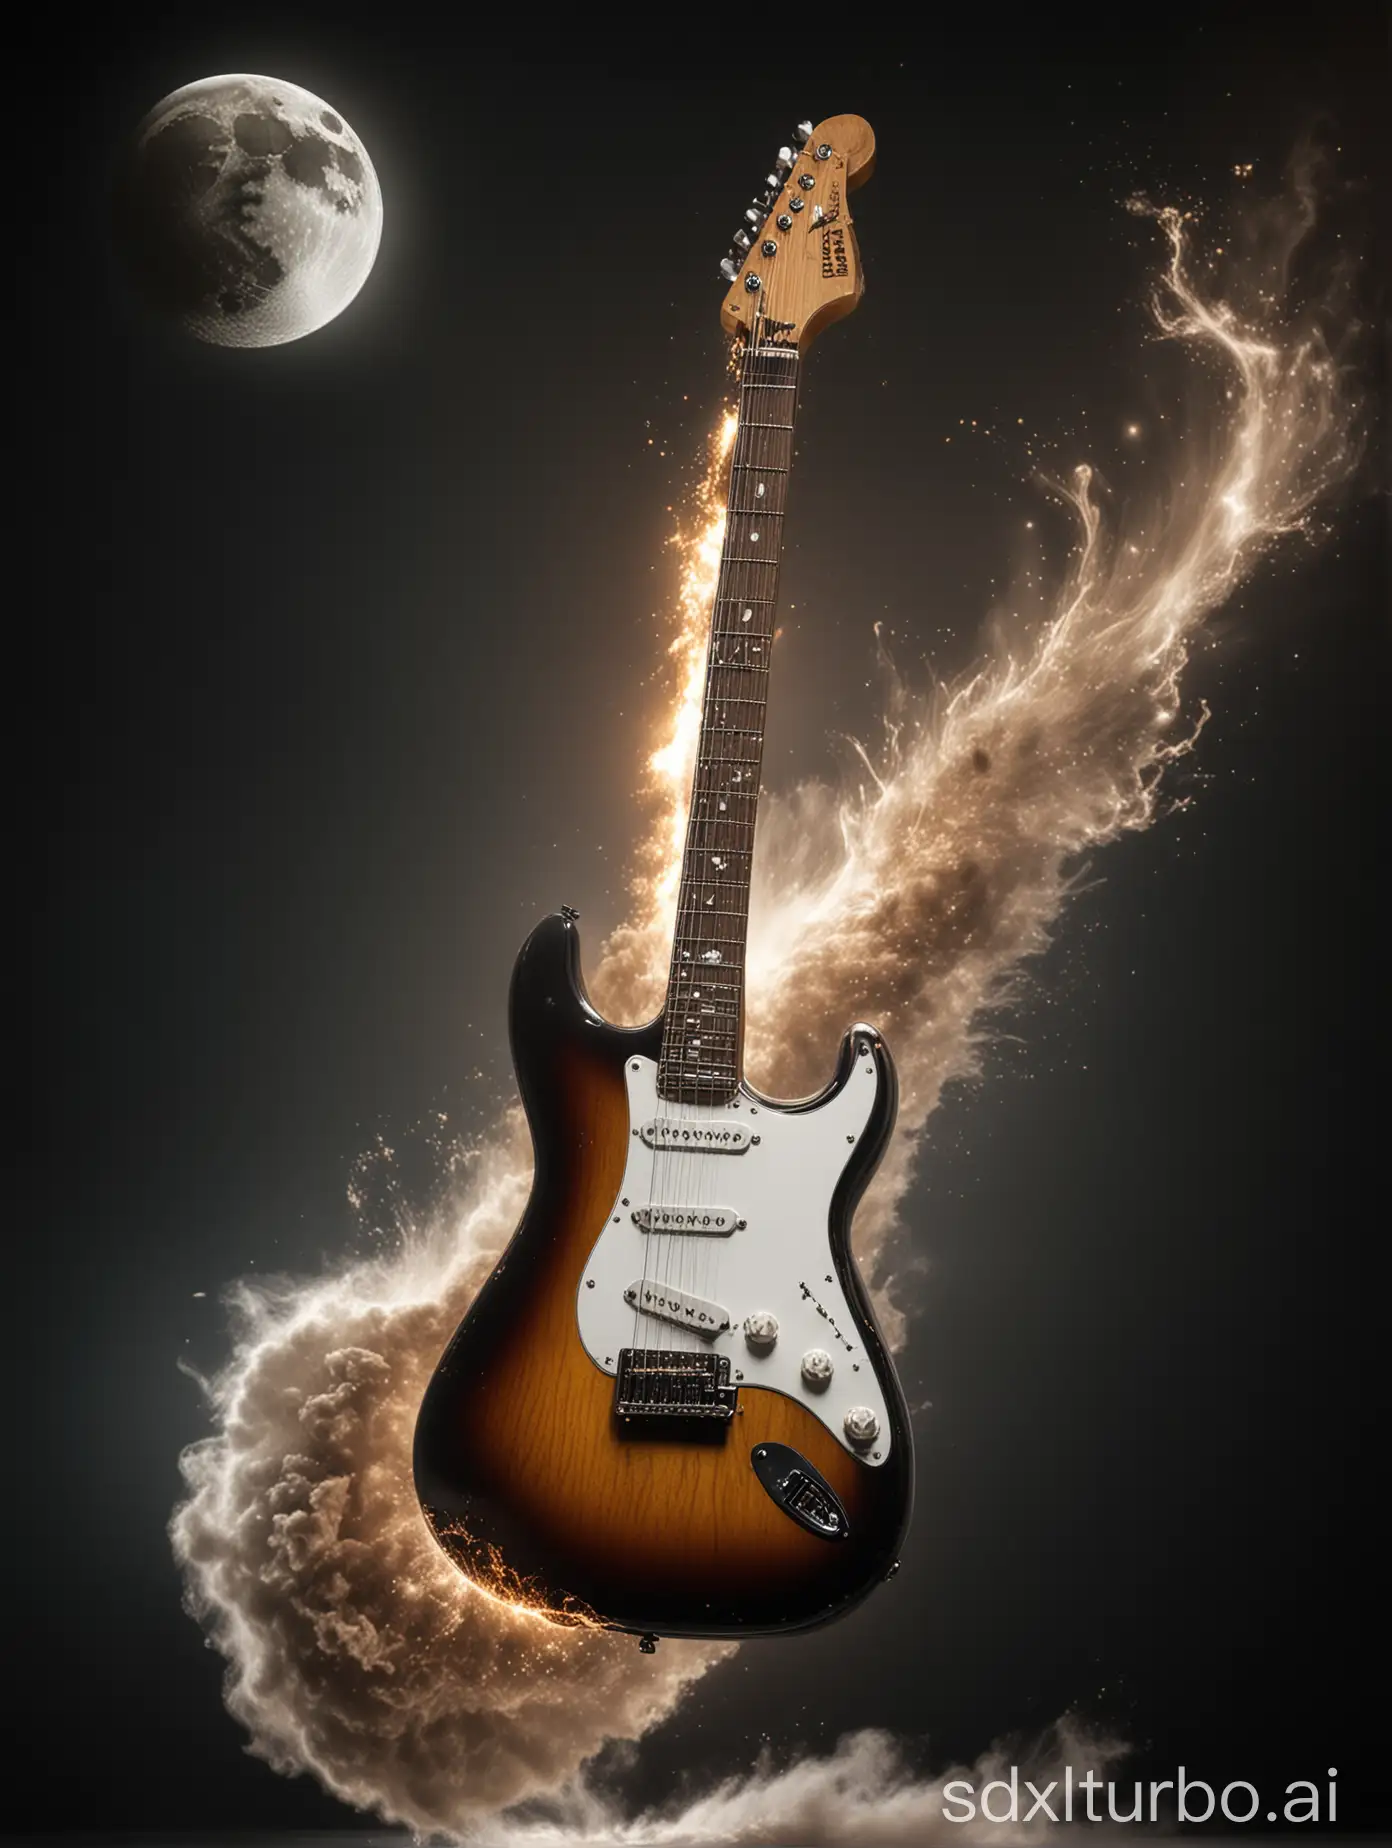 HighResolution-Electric-Guitar-Kicking-the-Moon-Photorealistic-Music-Art